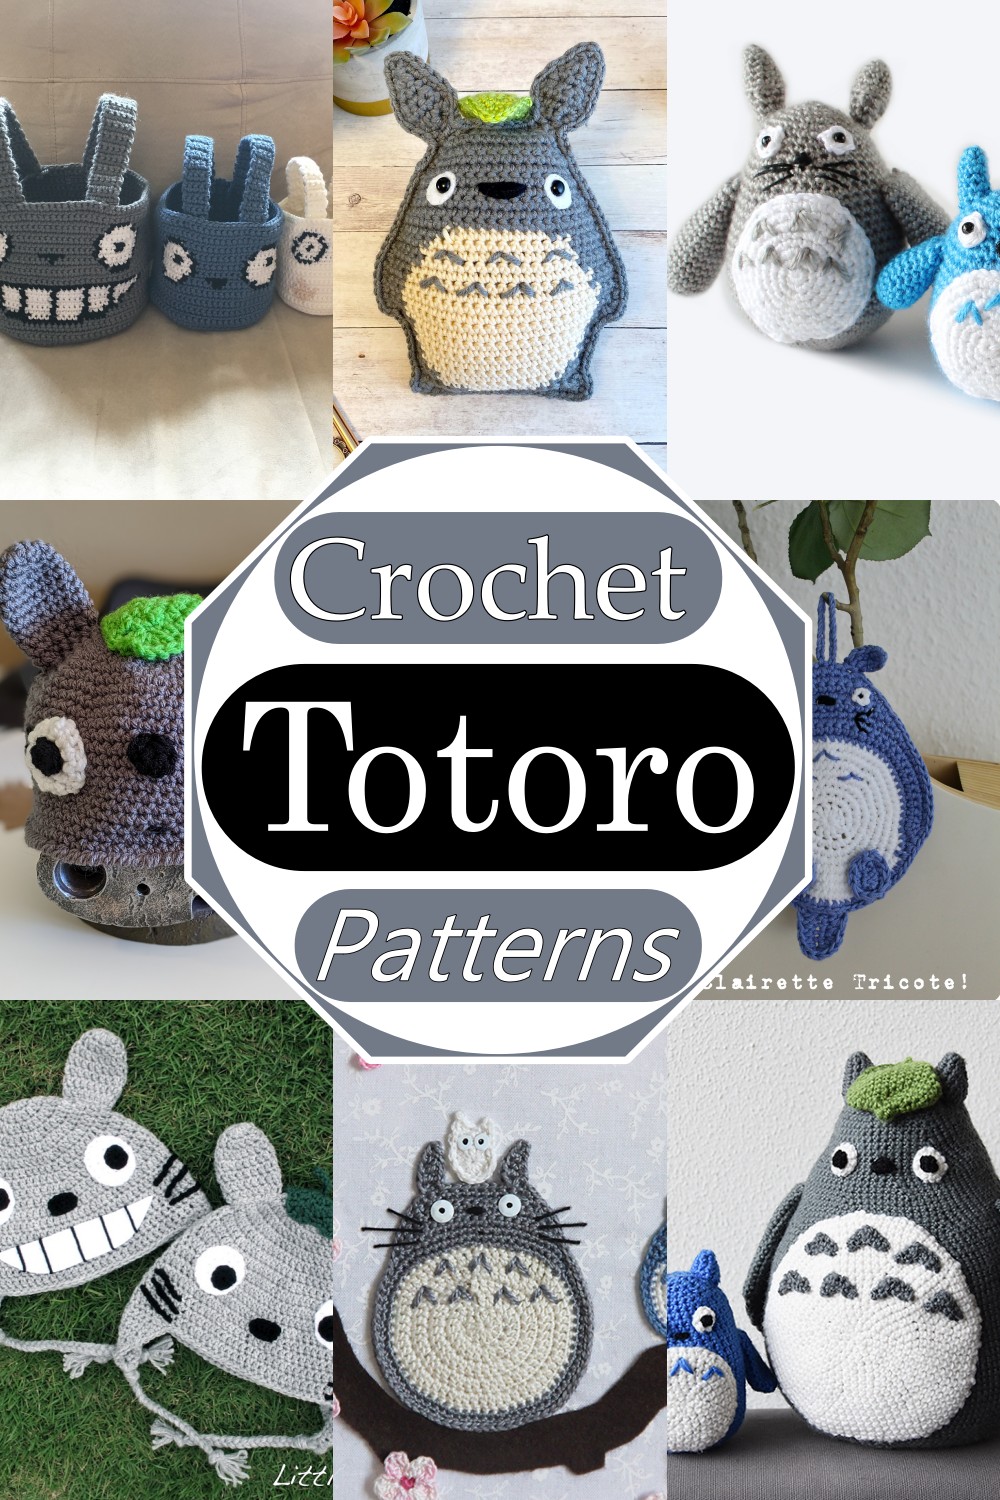 Crochet Totoro Patterns